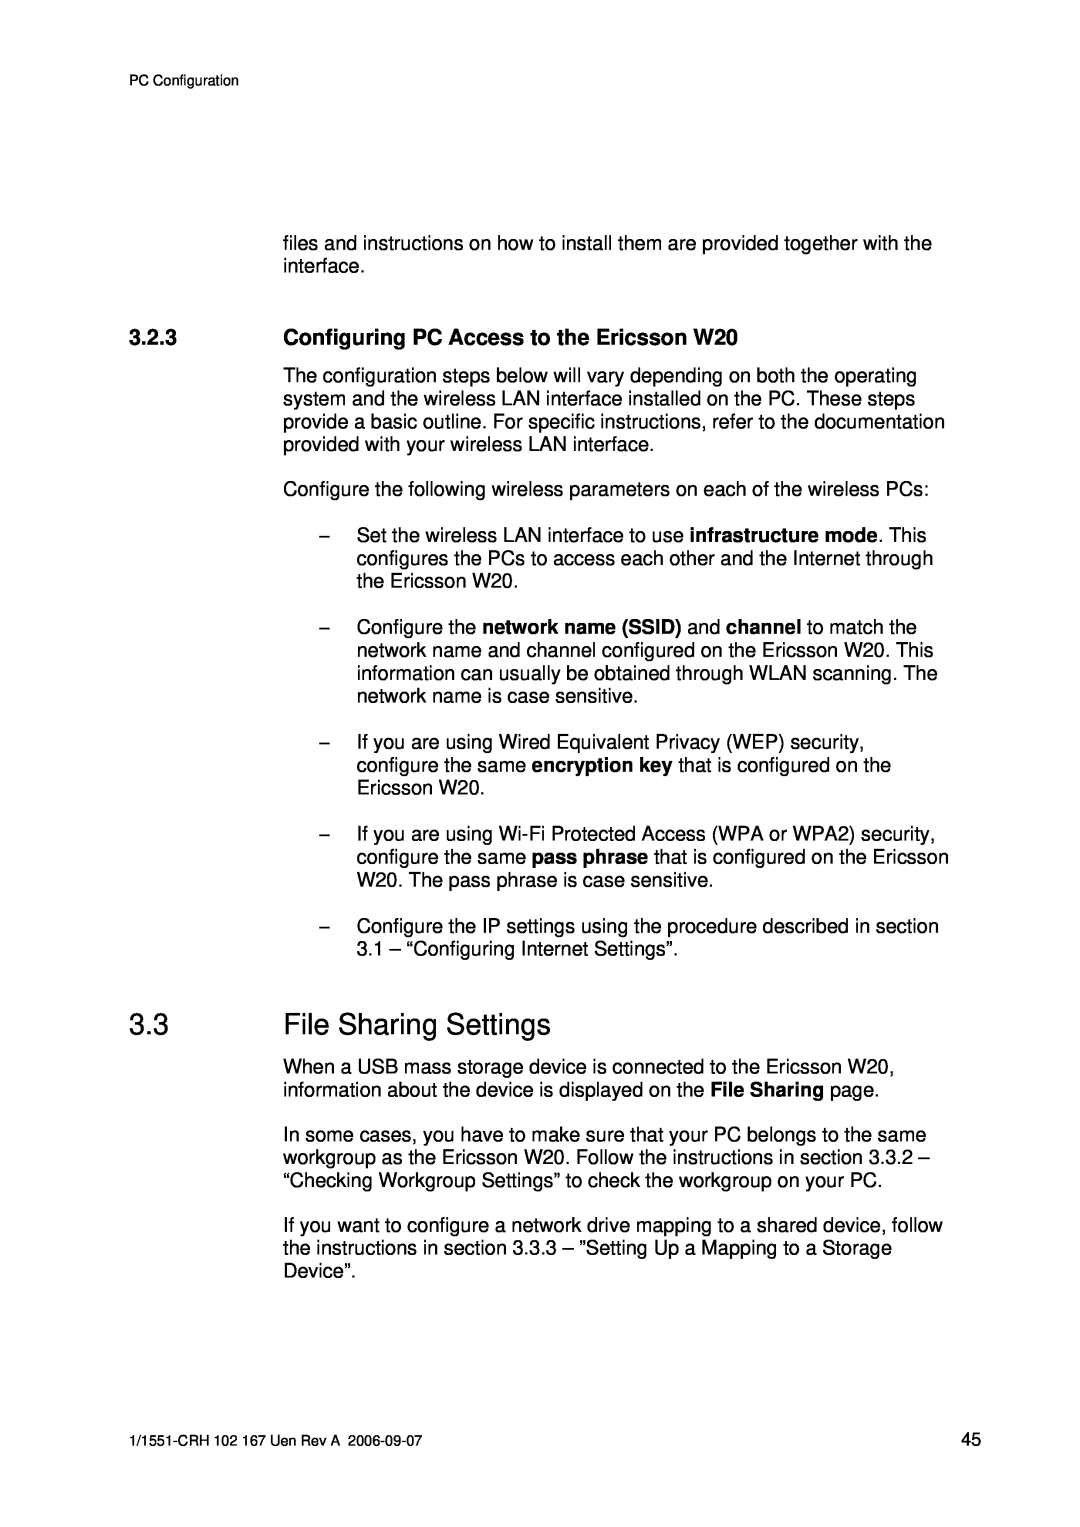 Ericsson manual File Sharing Settings, Configuring PC Access to the Ericsson W20 